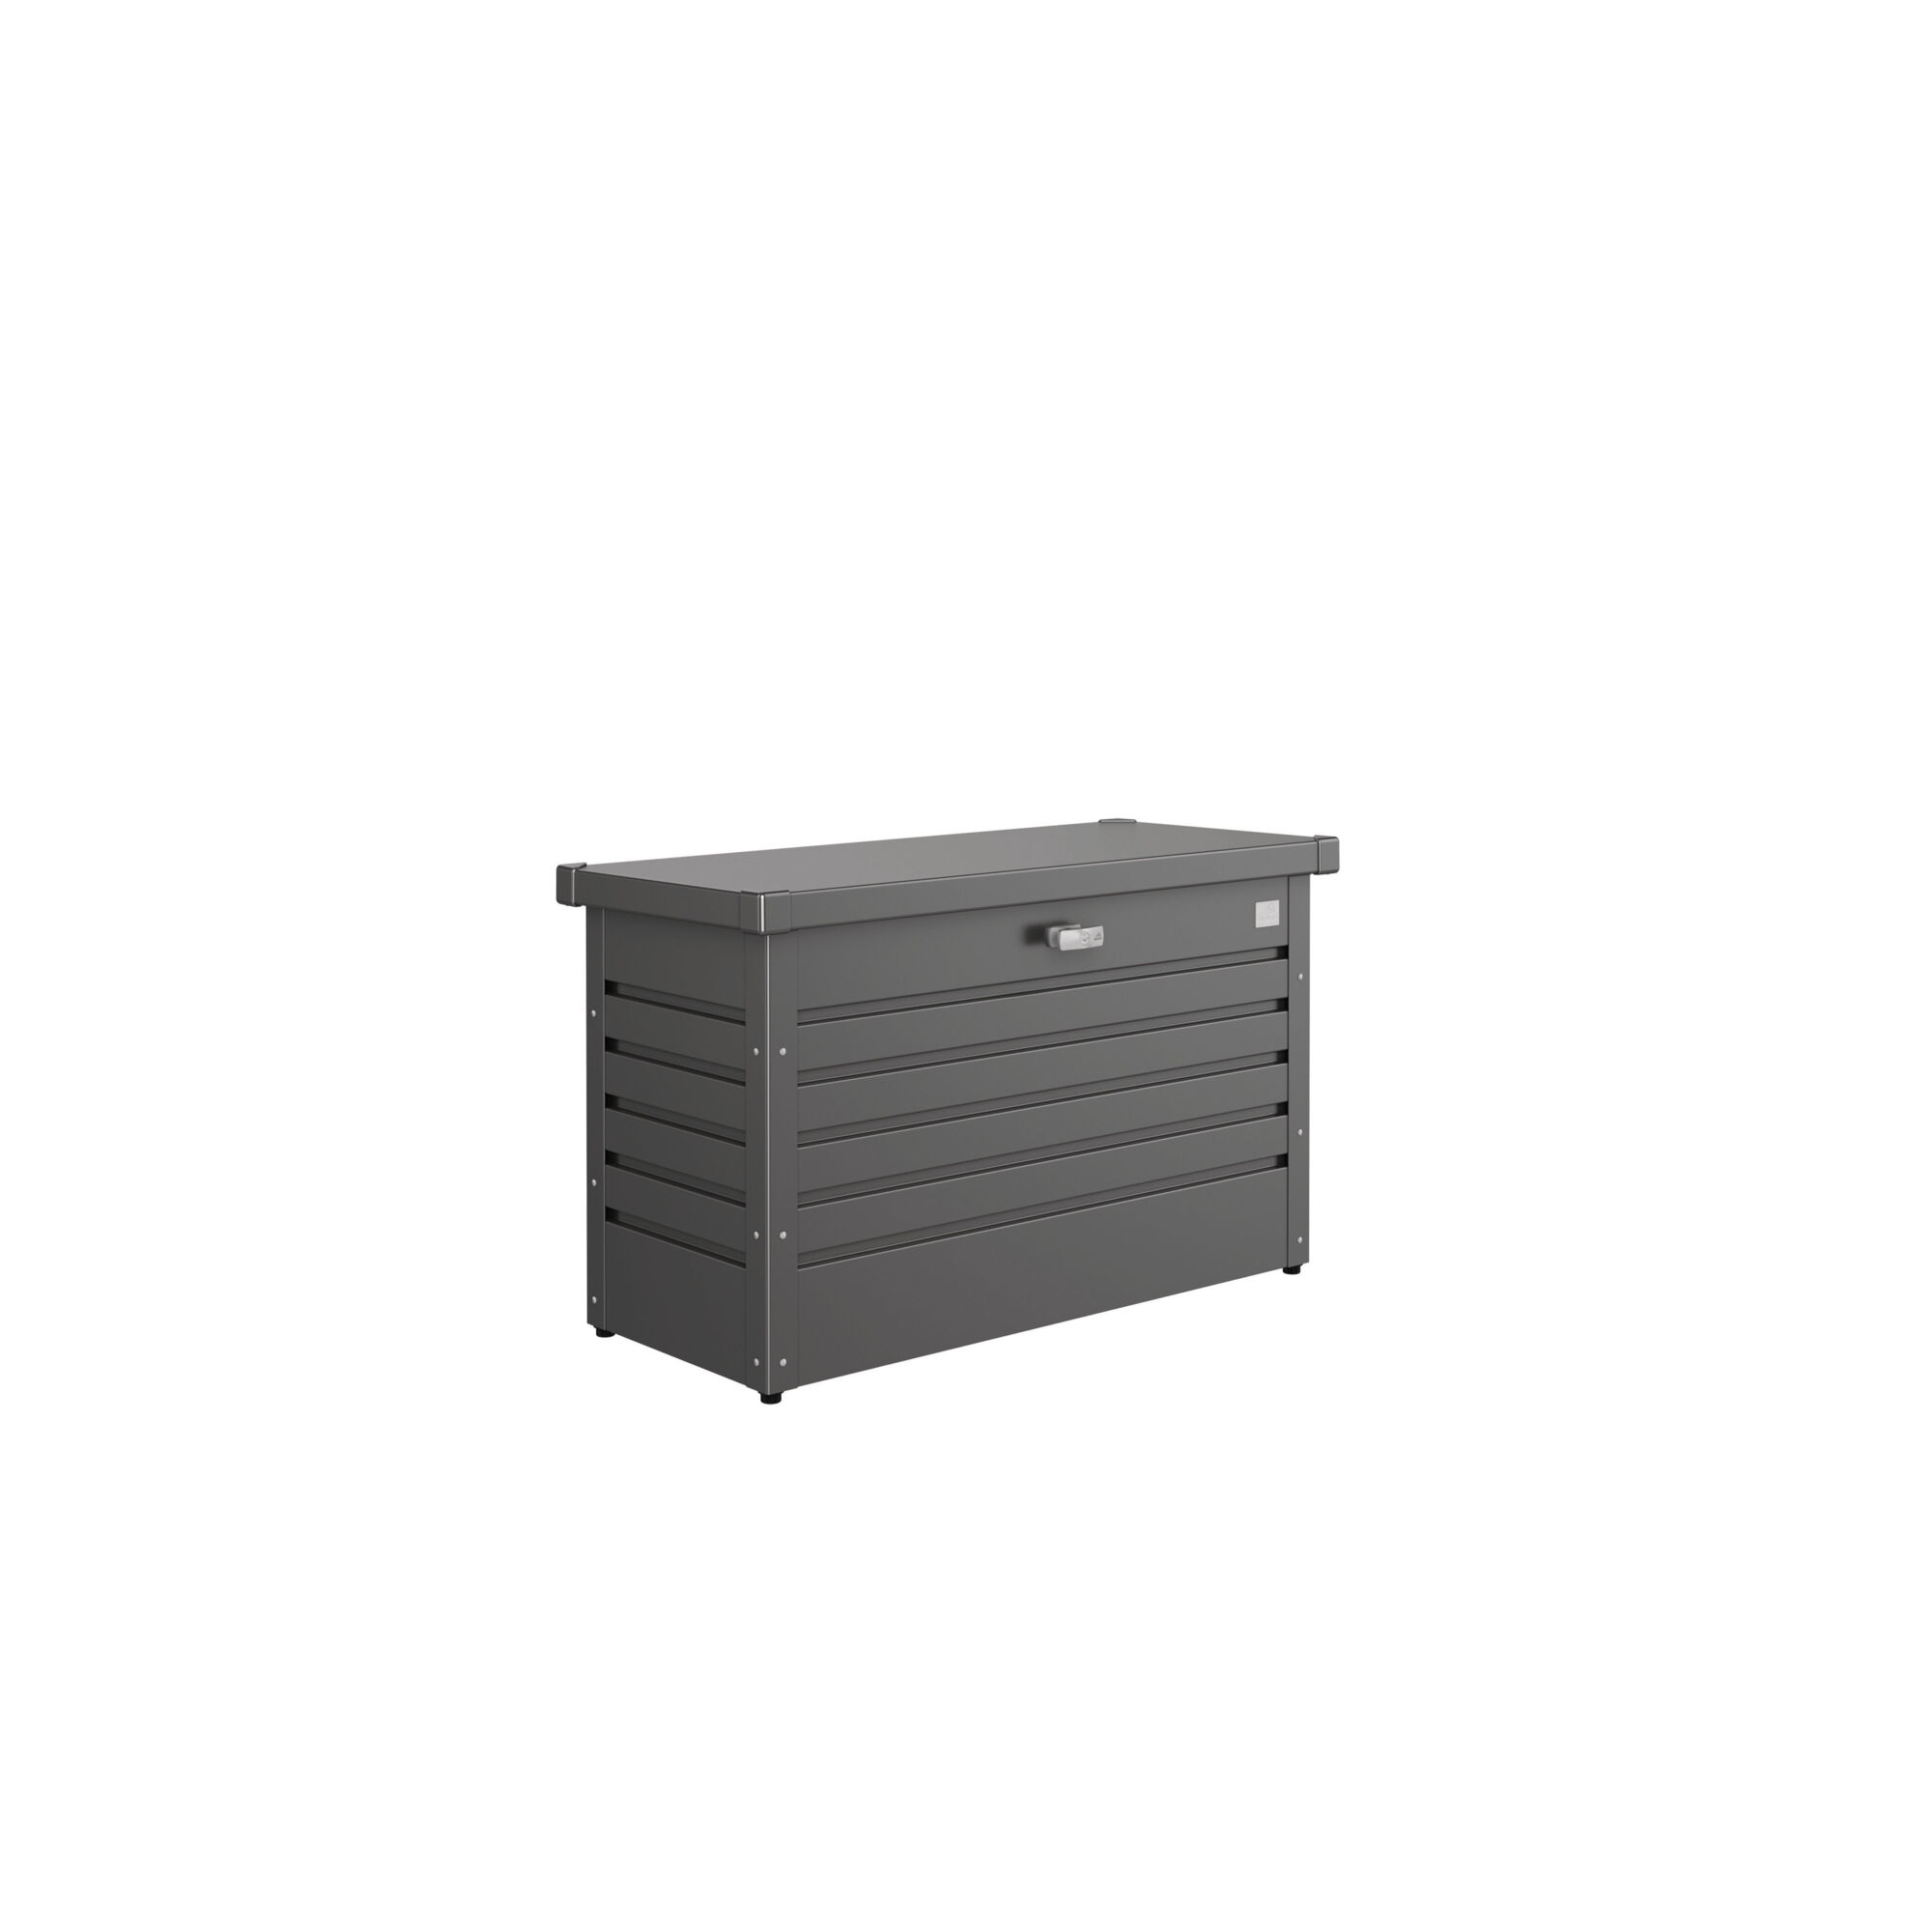 Poly-Tex Inc., 51 Gallon Deck Box - Dark Gray, Model 65710